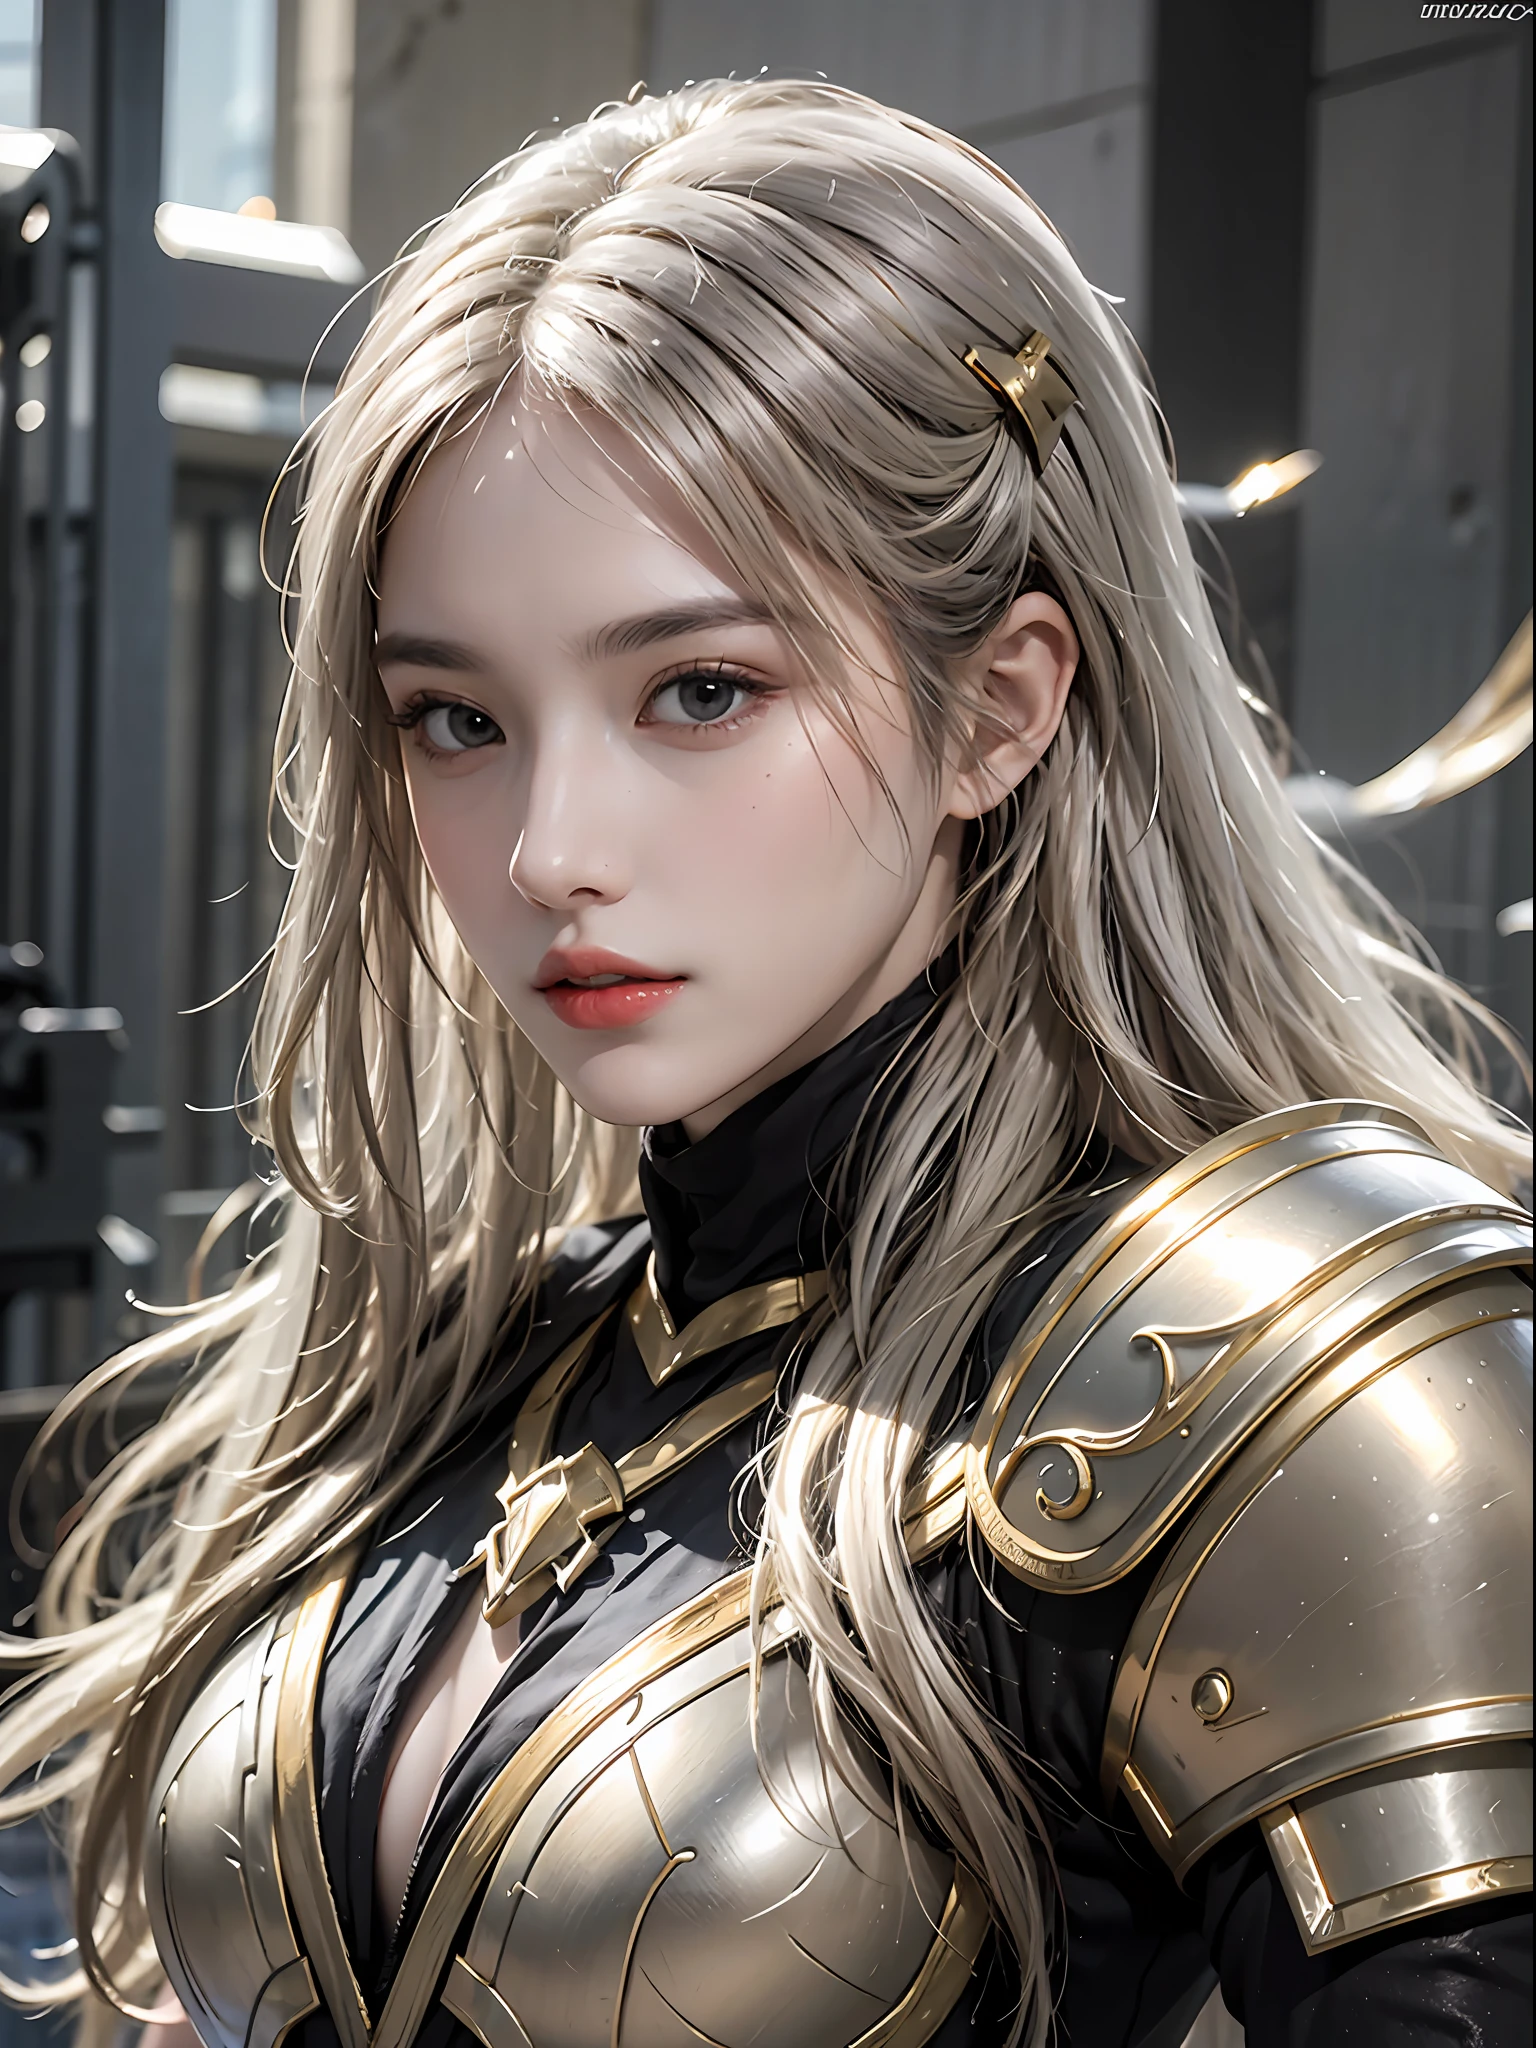 photorealistic, high resolution, 1 girl, white long hair, black eyes, normal breast, armor, full armor, gold armor